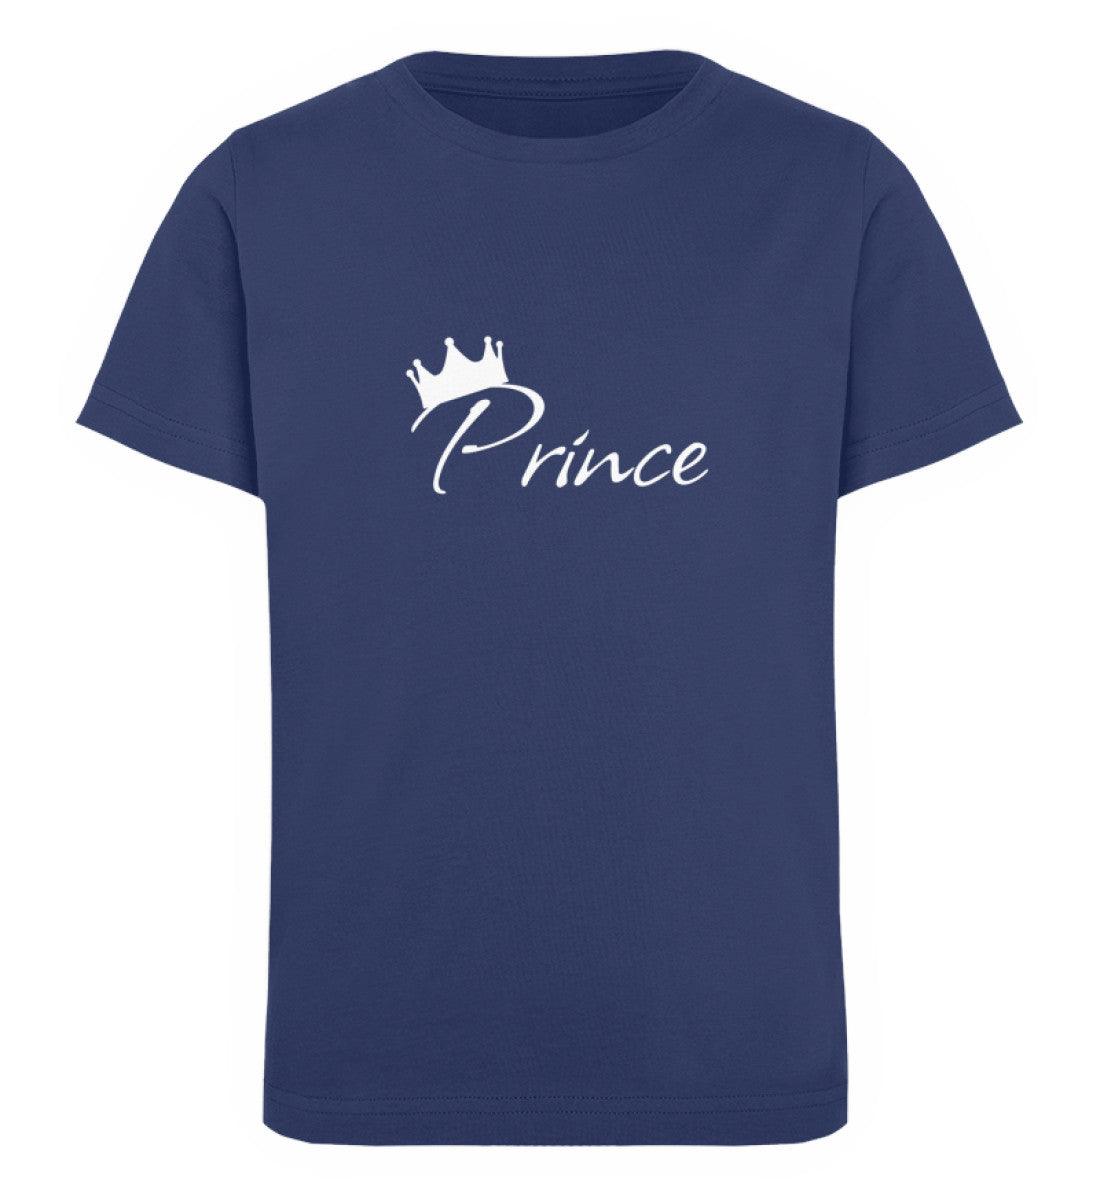 Prince  - Kinder Organic T-Shirt - Papasache